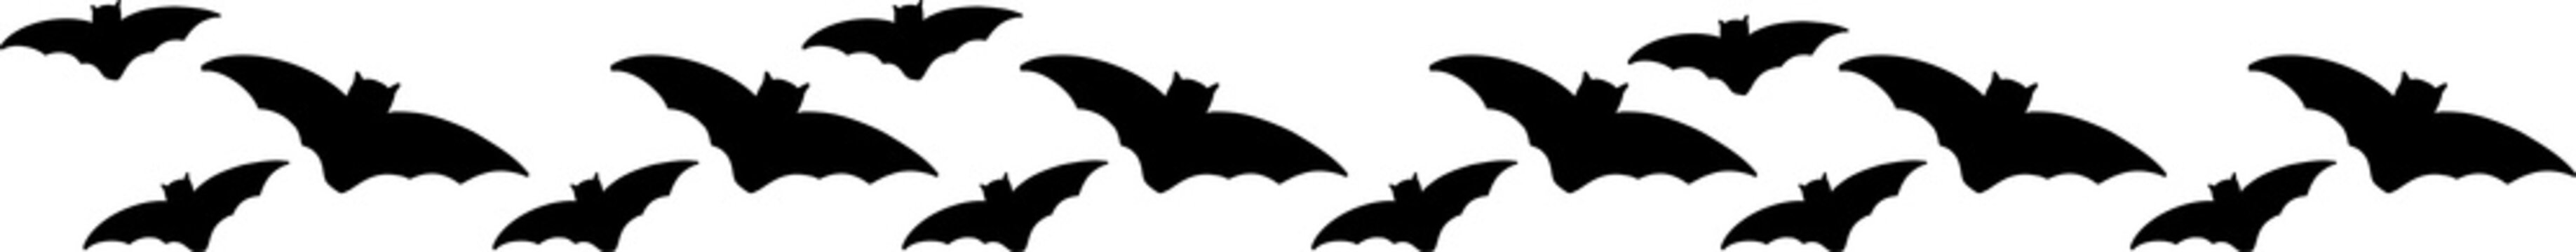 Halloween design border and divider. Clipart spooky elements skull, bat flock, cat. Flat doodle illustration